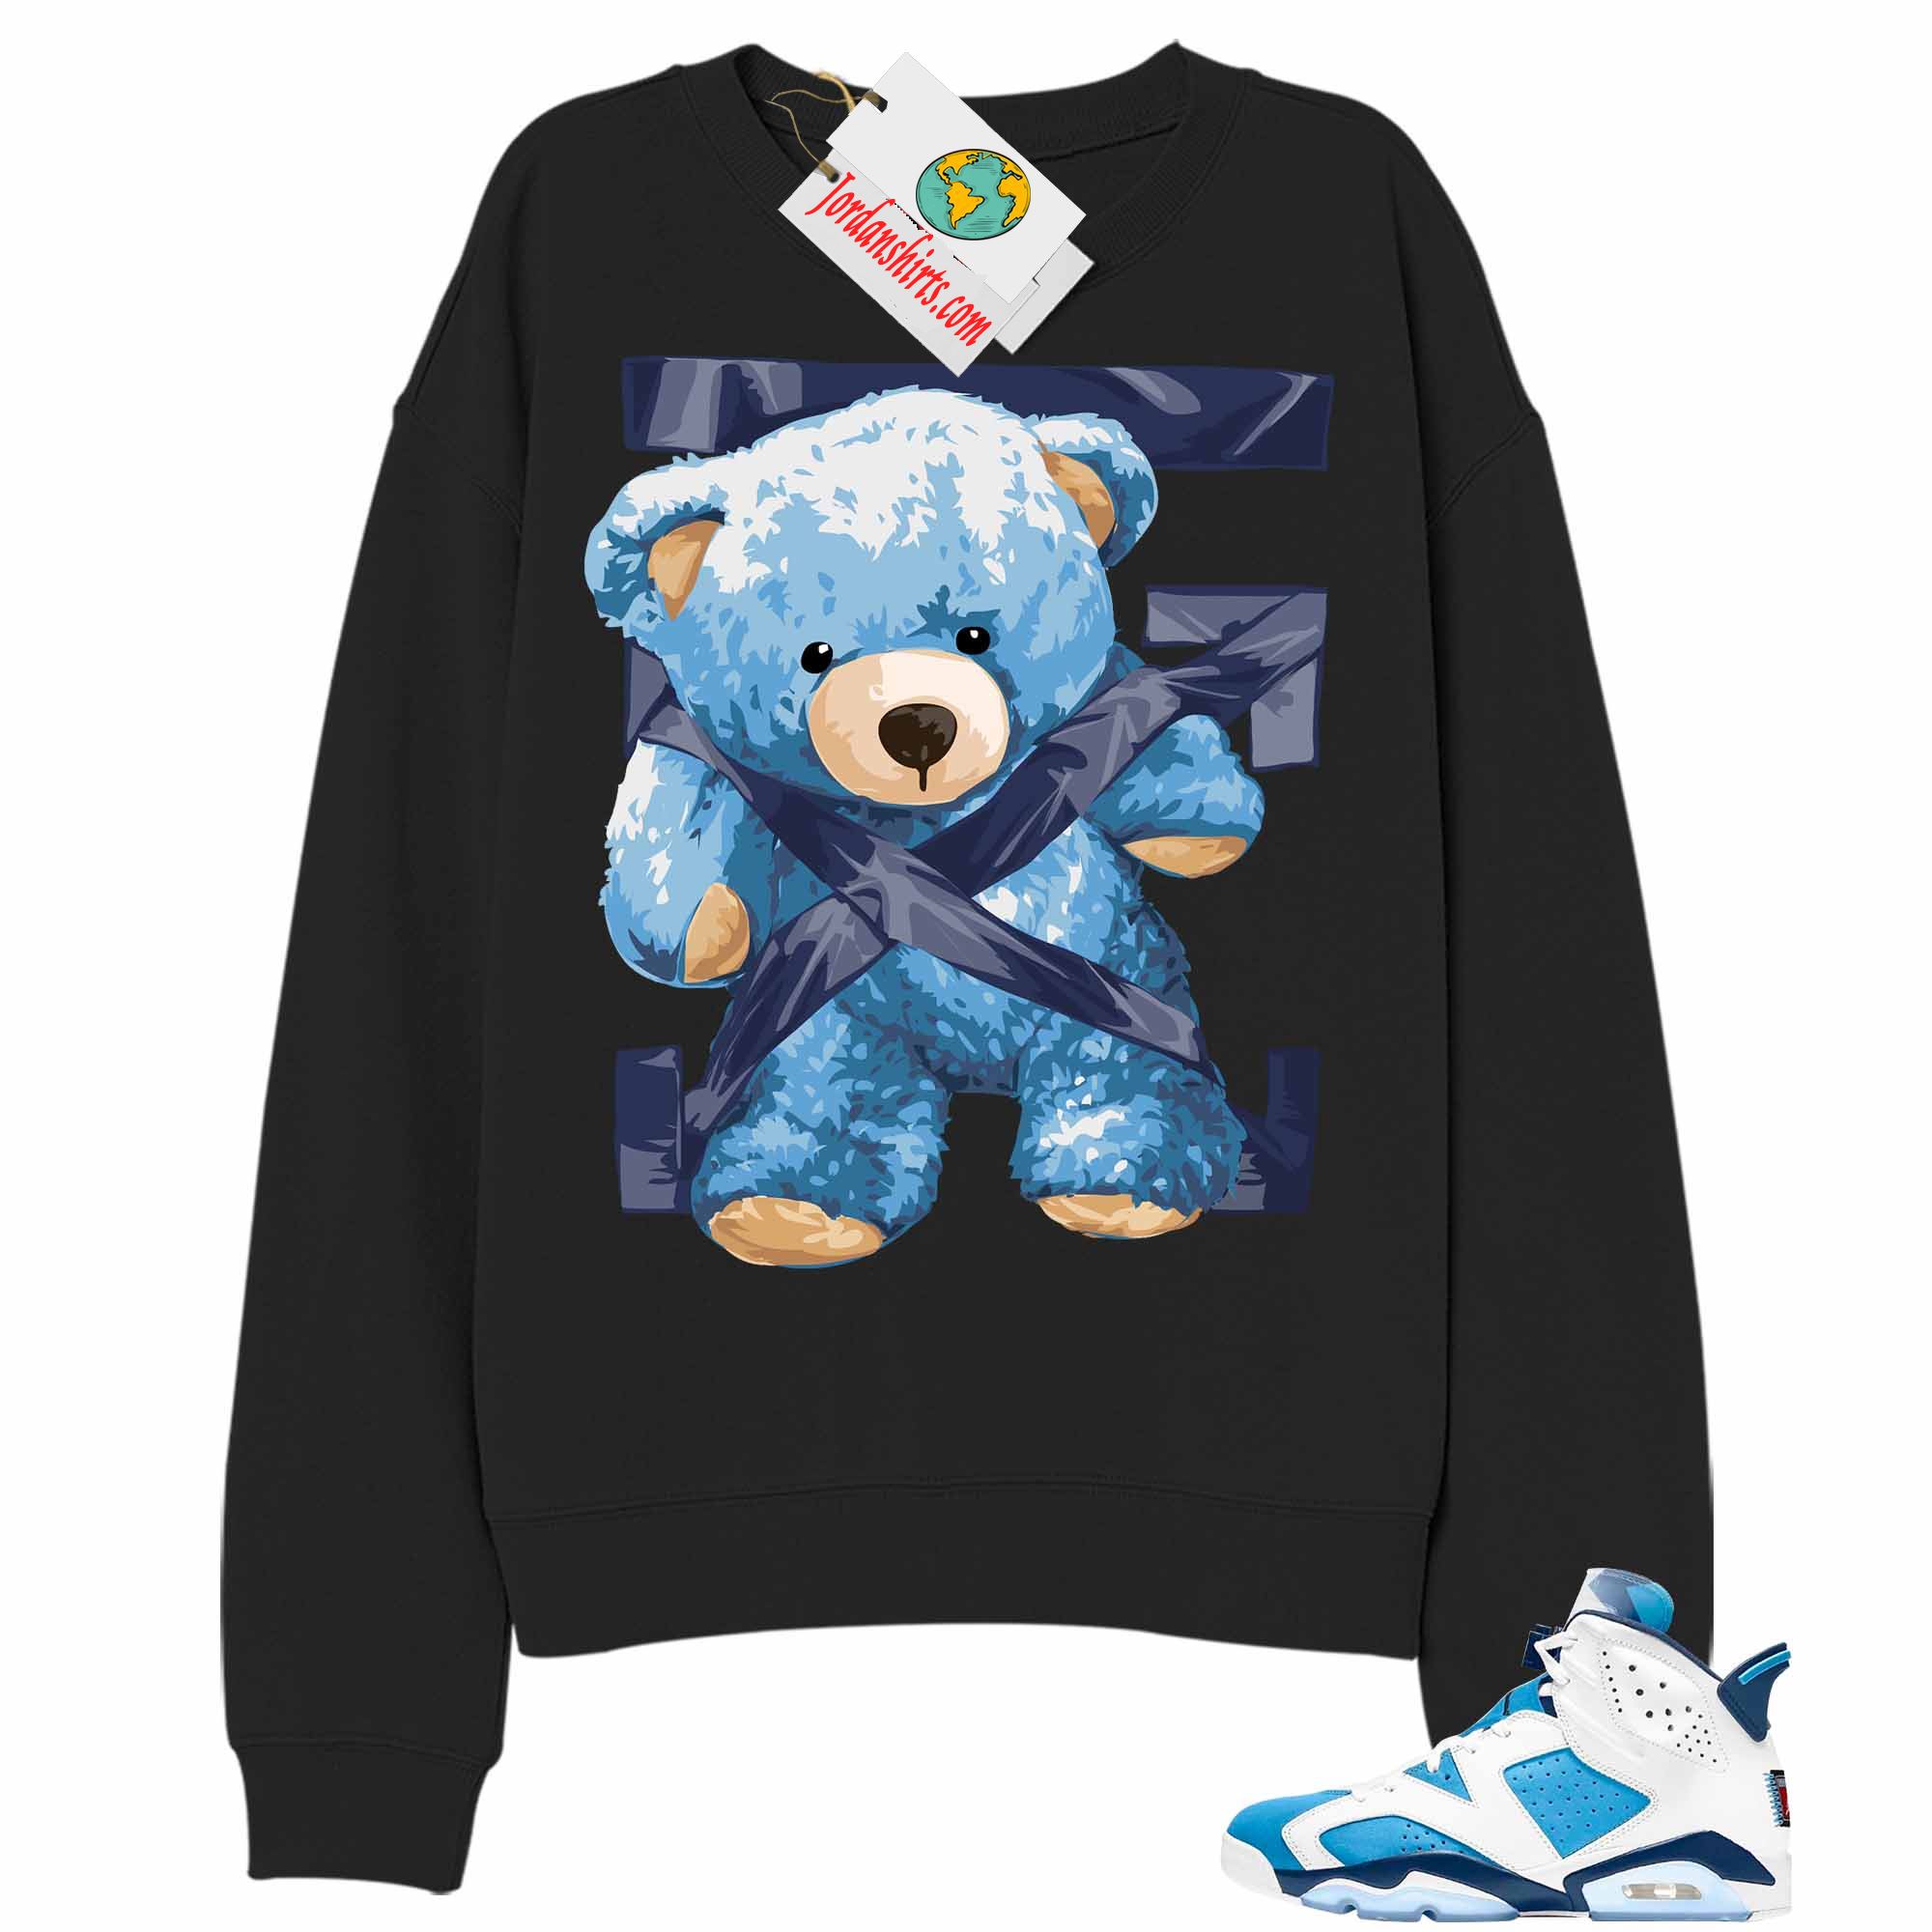 Jordan 6 Sweatshirt, Teddy Bear Duck Tape Black Sweatshirt Air Jordan 6 Unc 6s Plus Size Up To 5xl